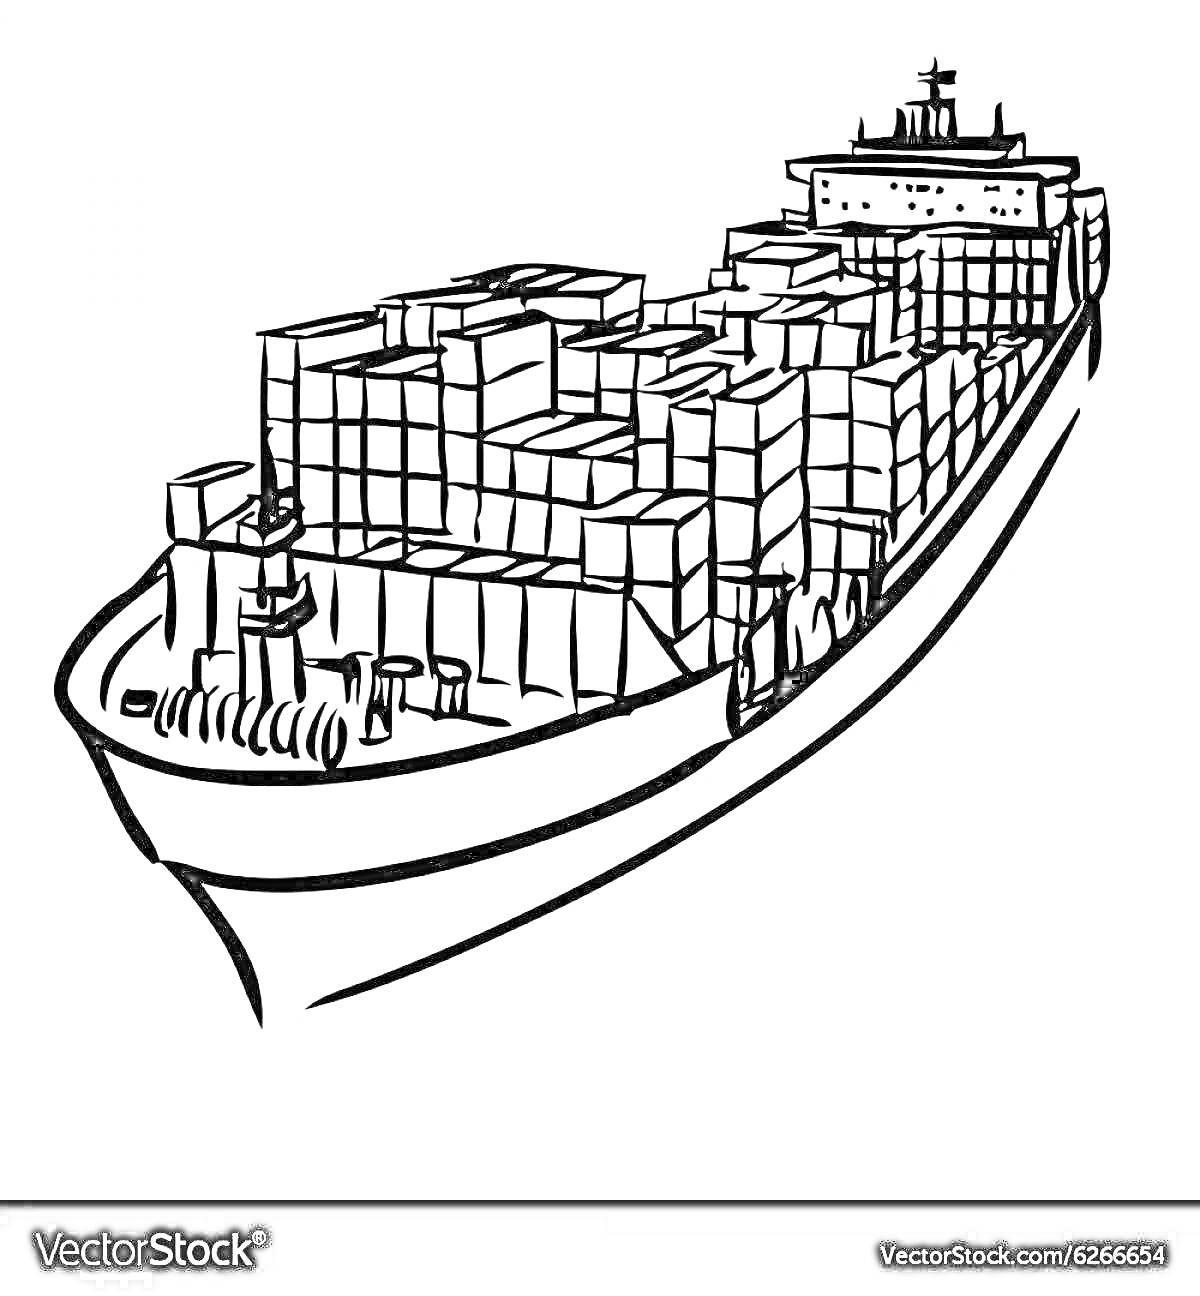 На раскраске изображено: Контейнеровоз, Морской транспорт, Палуба, Мачта, Судоходство